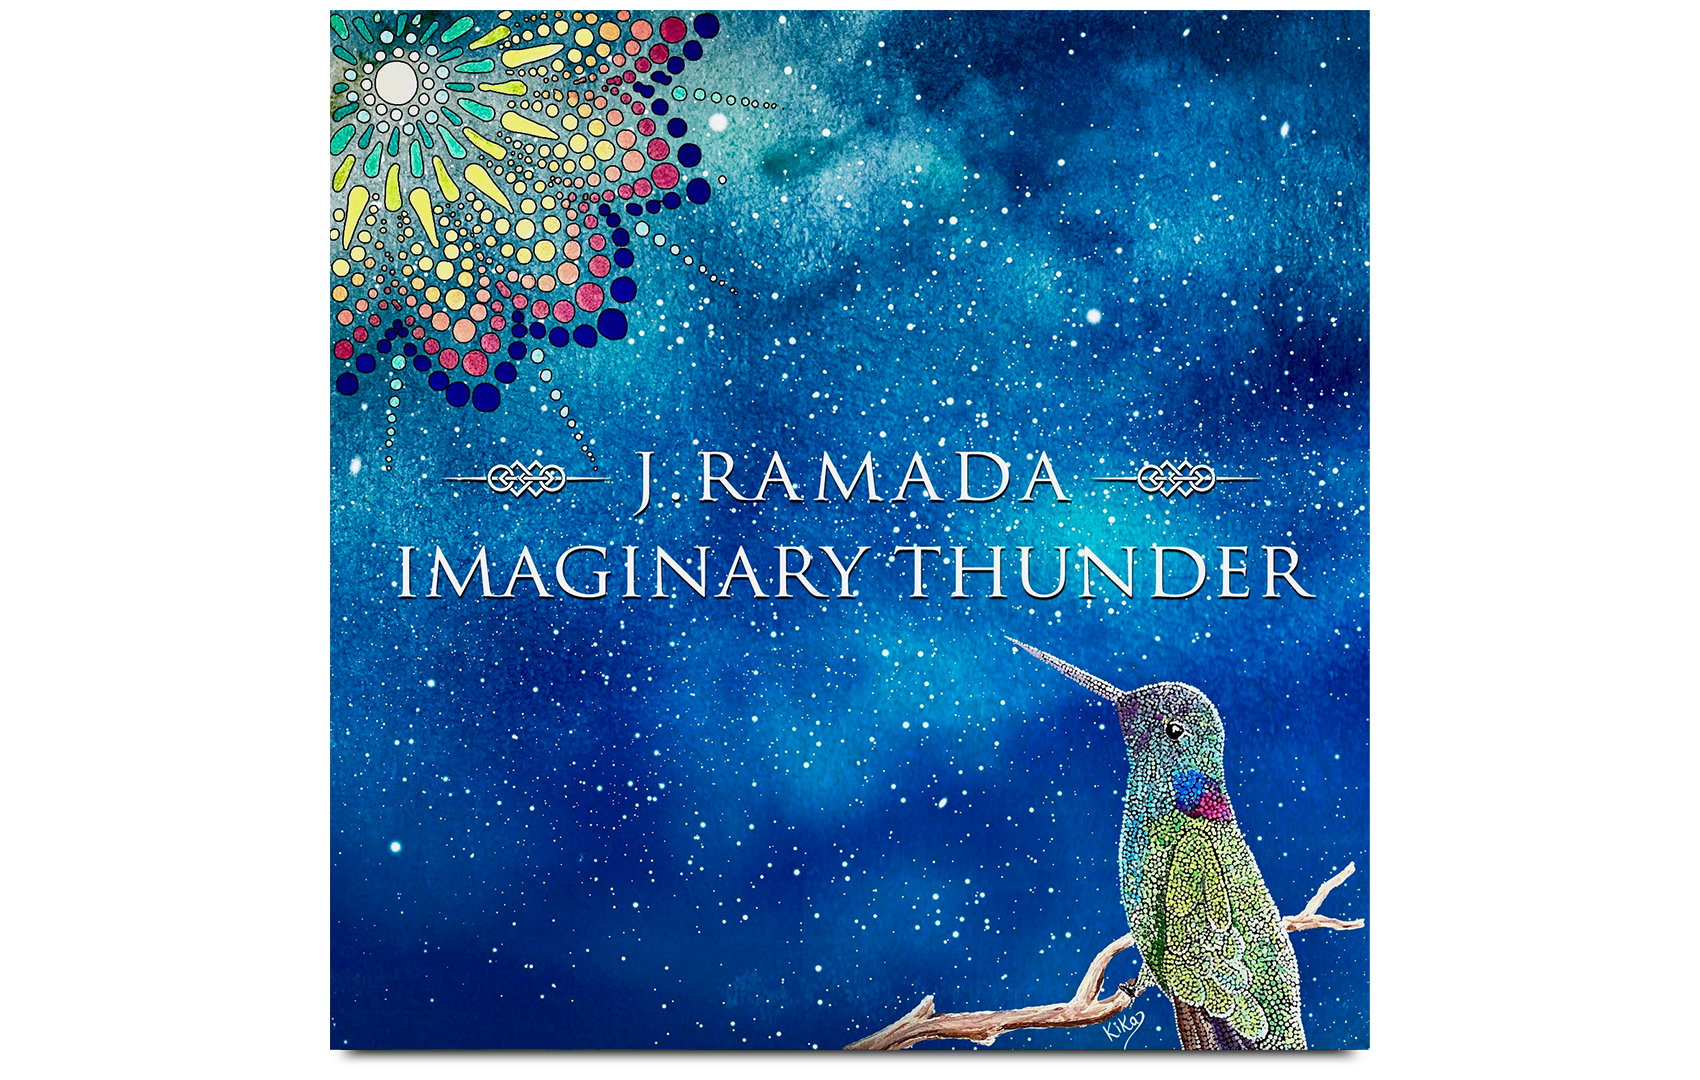 j.ramada imaginary thunder digital single design